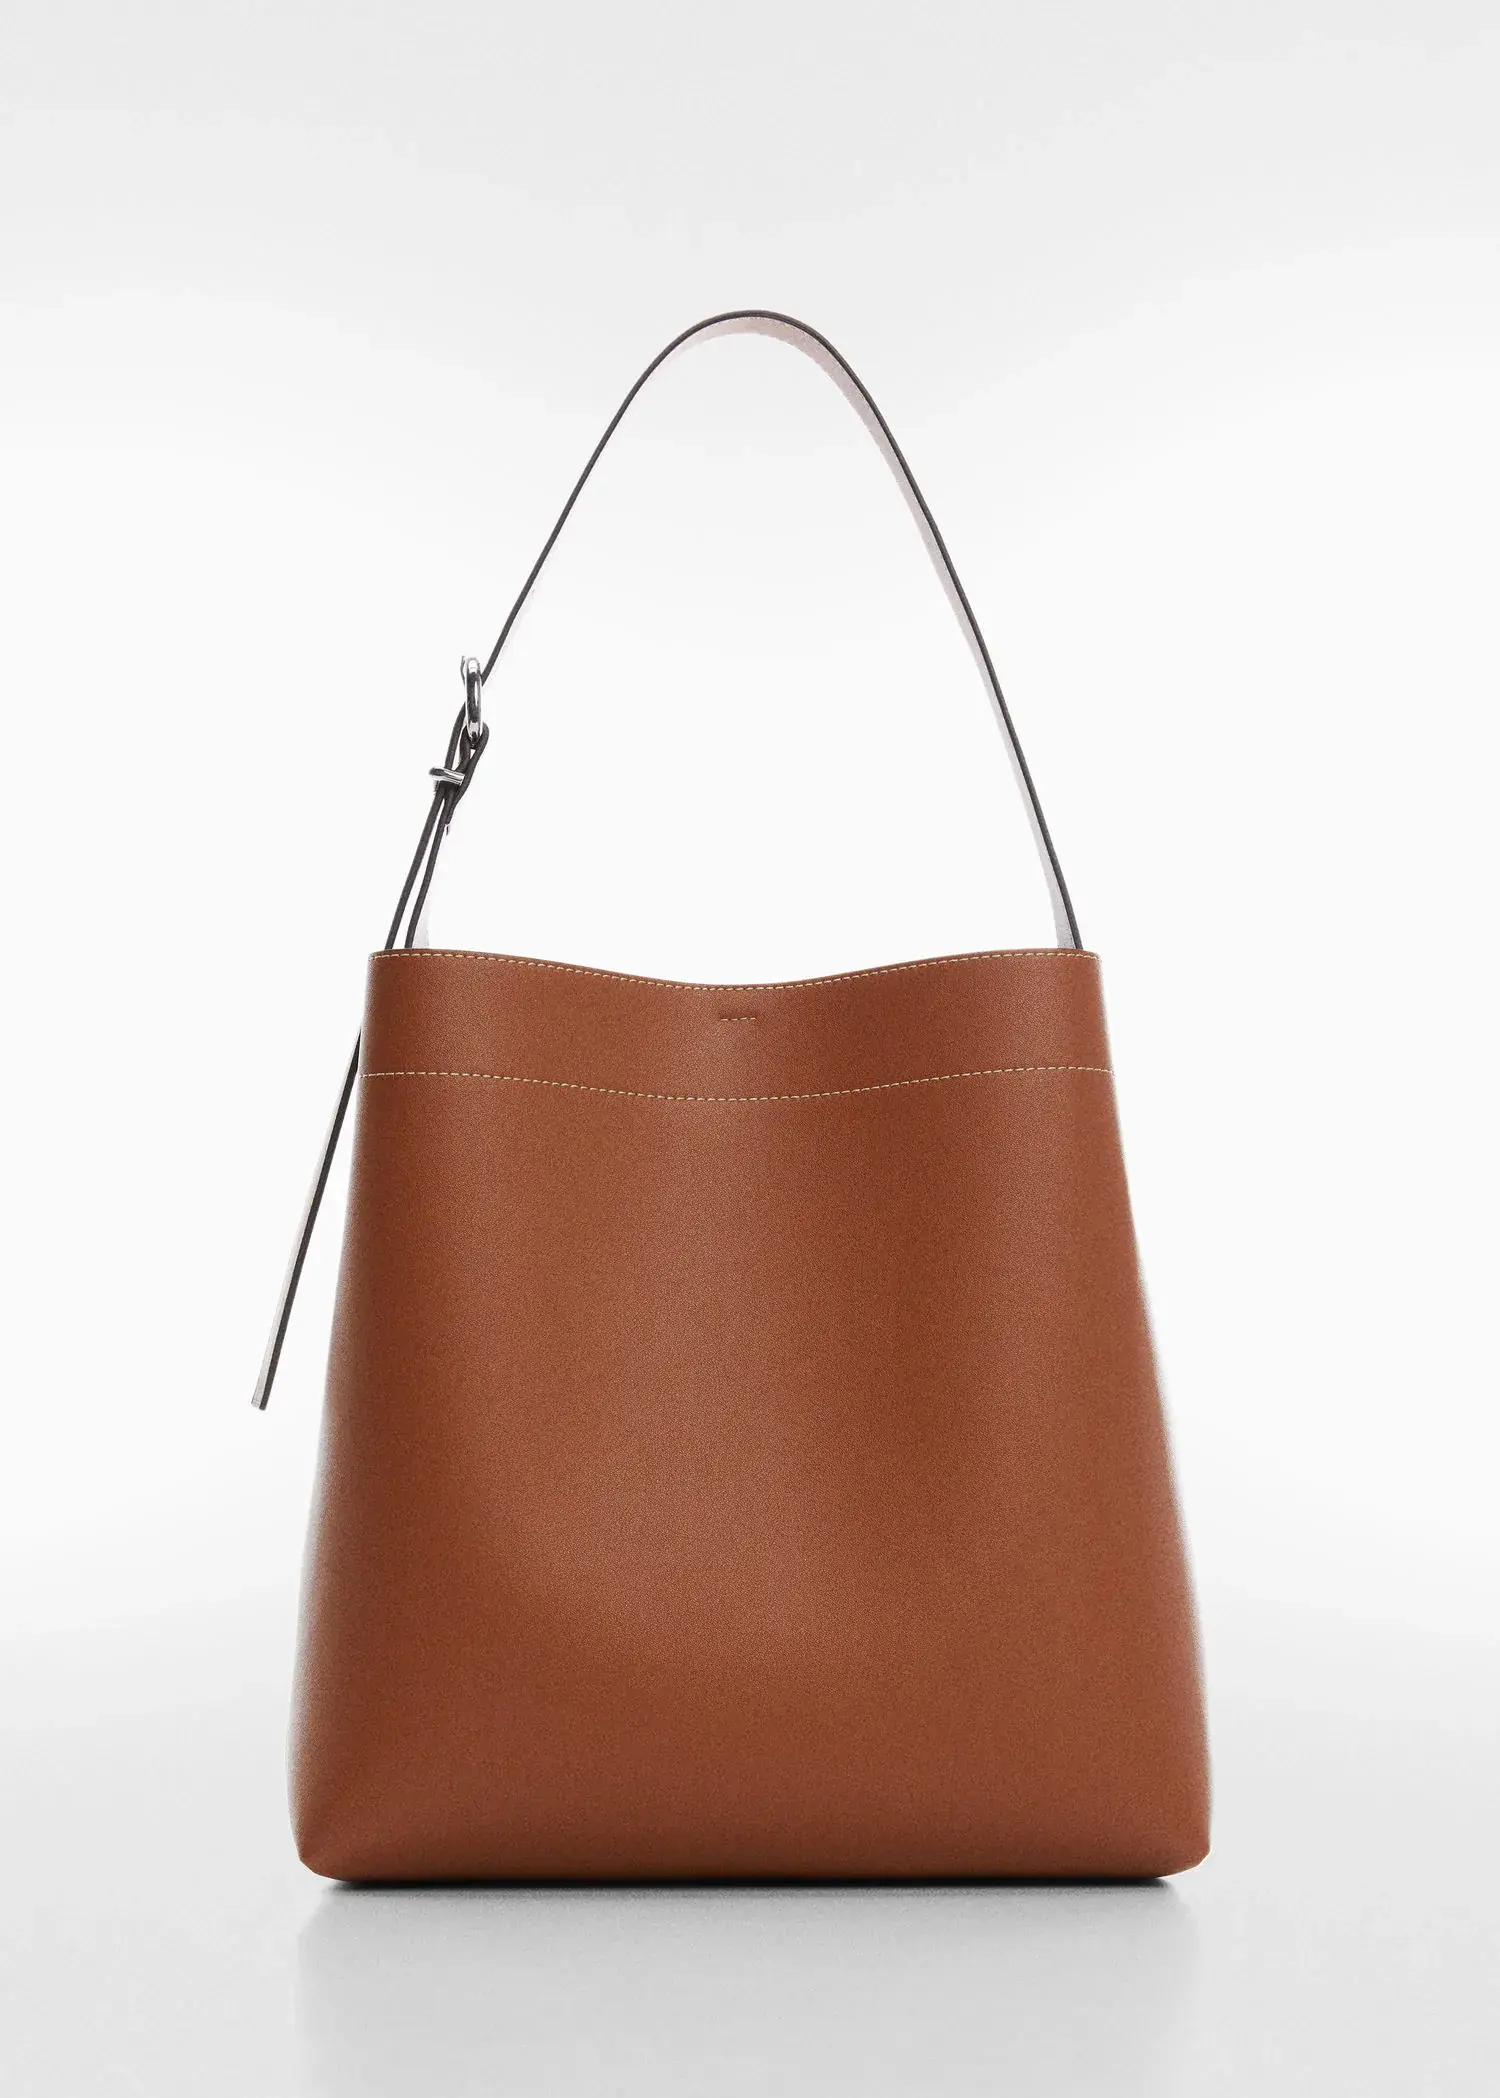 Mango Short handle shopper bag. a brown bag is shown with a silver handle. 